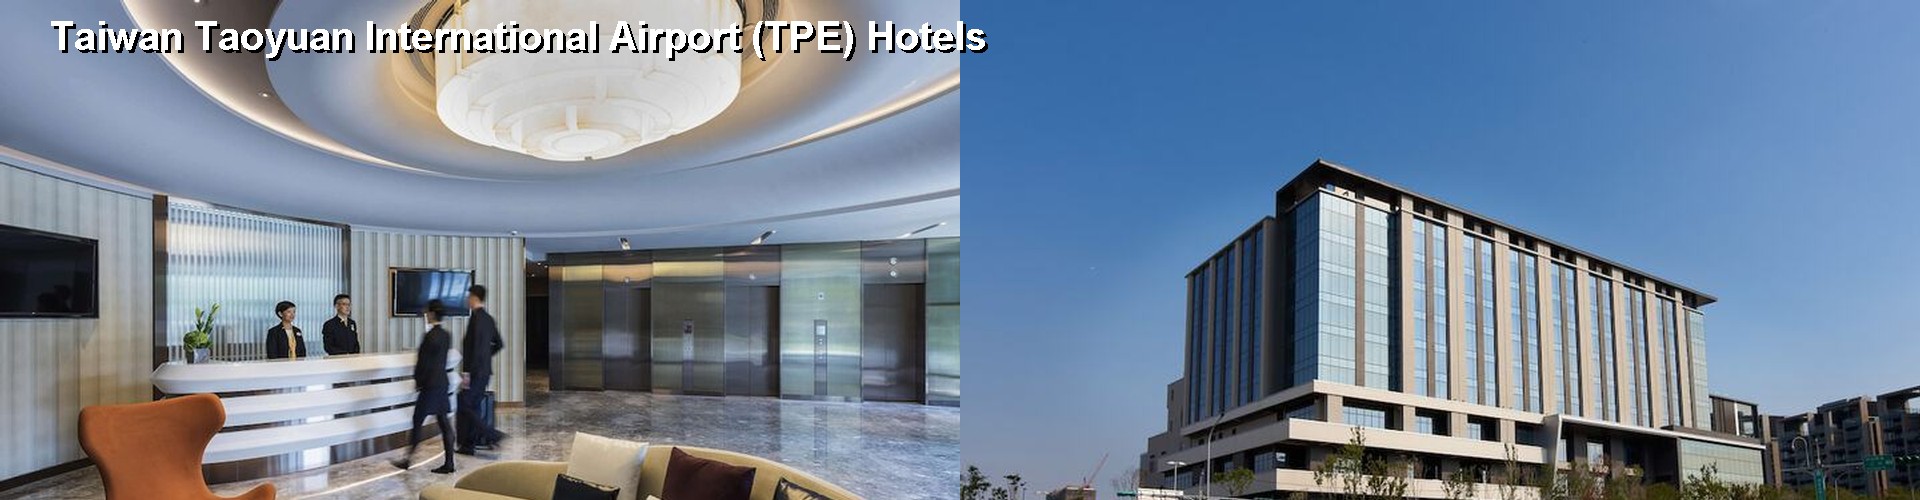 5 Best Hotels near Taiwan Taoyuan International Airport (TPE)